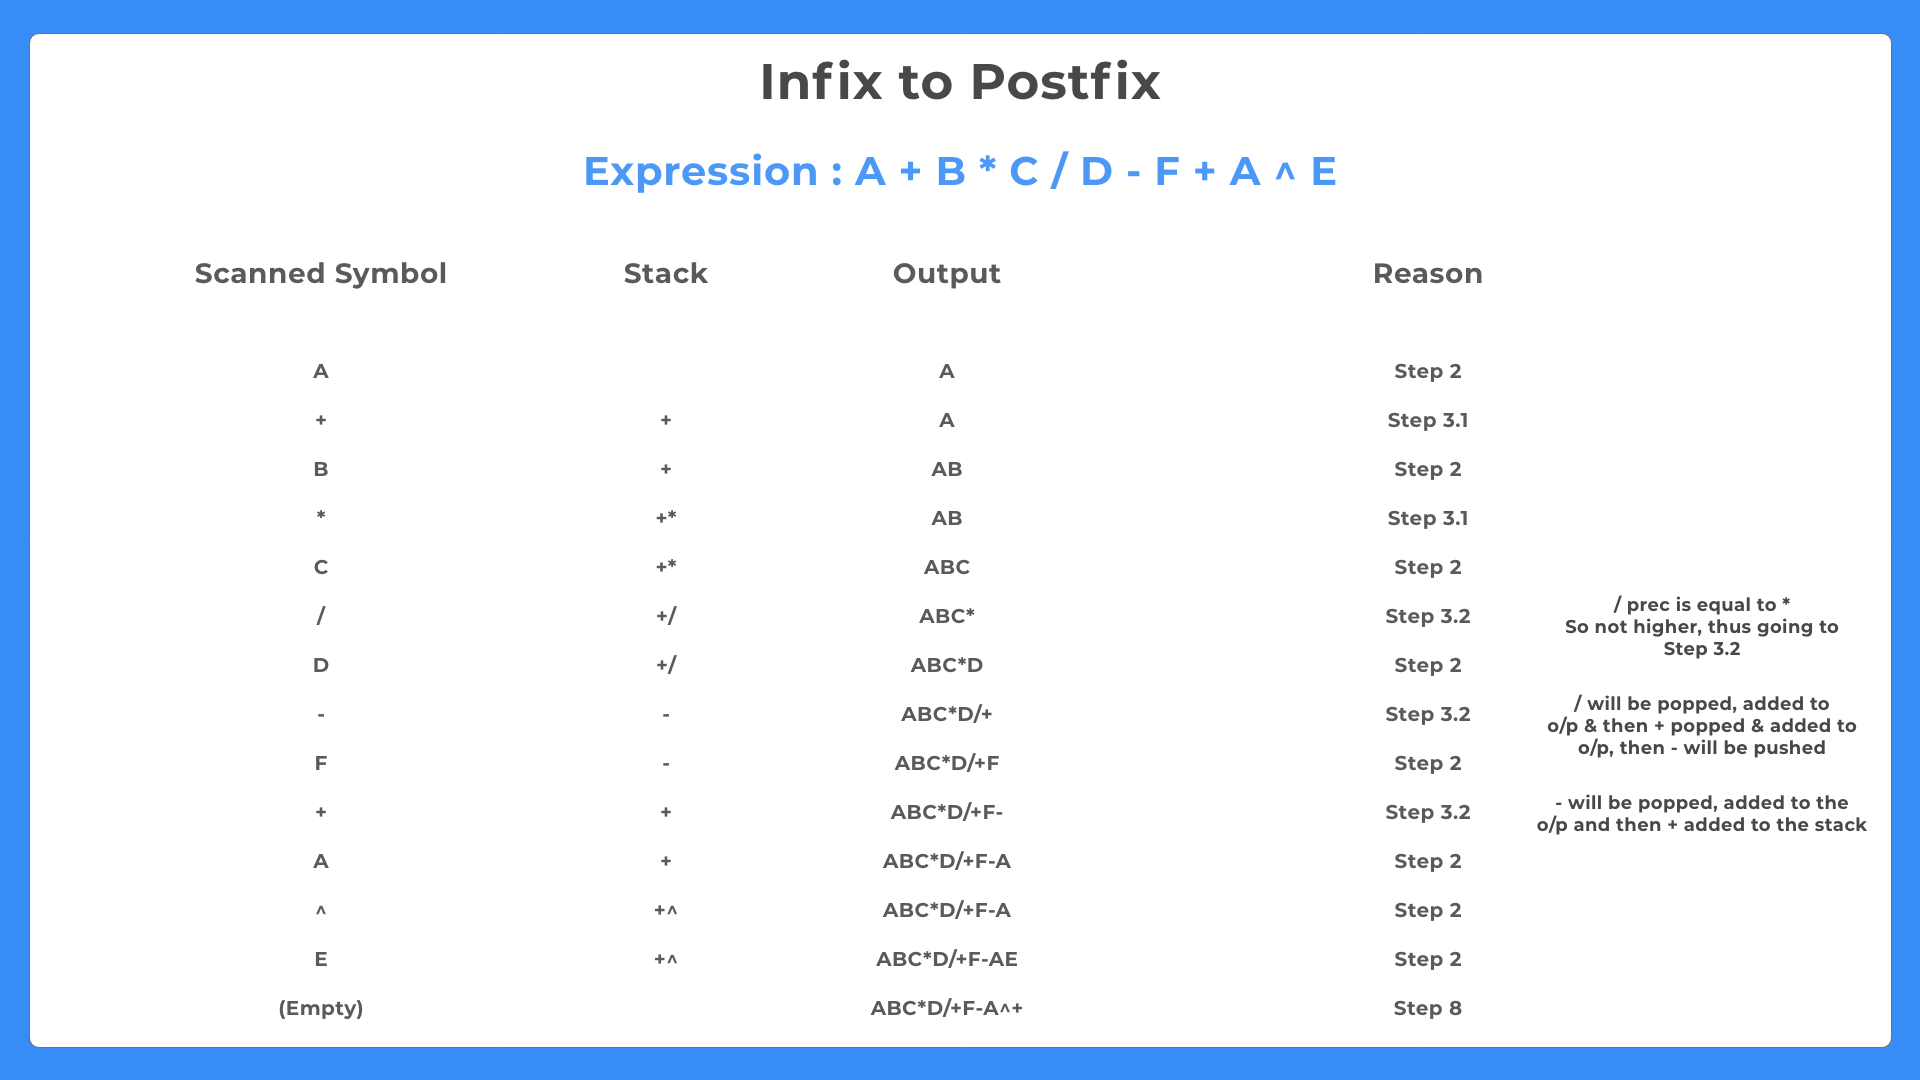 Infix to Postfix Conversion in C++